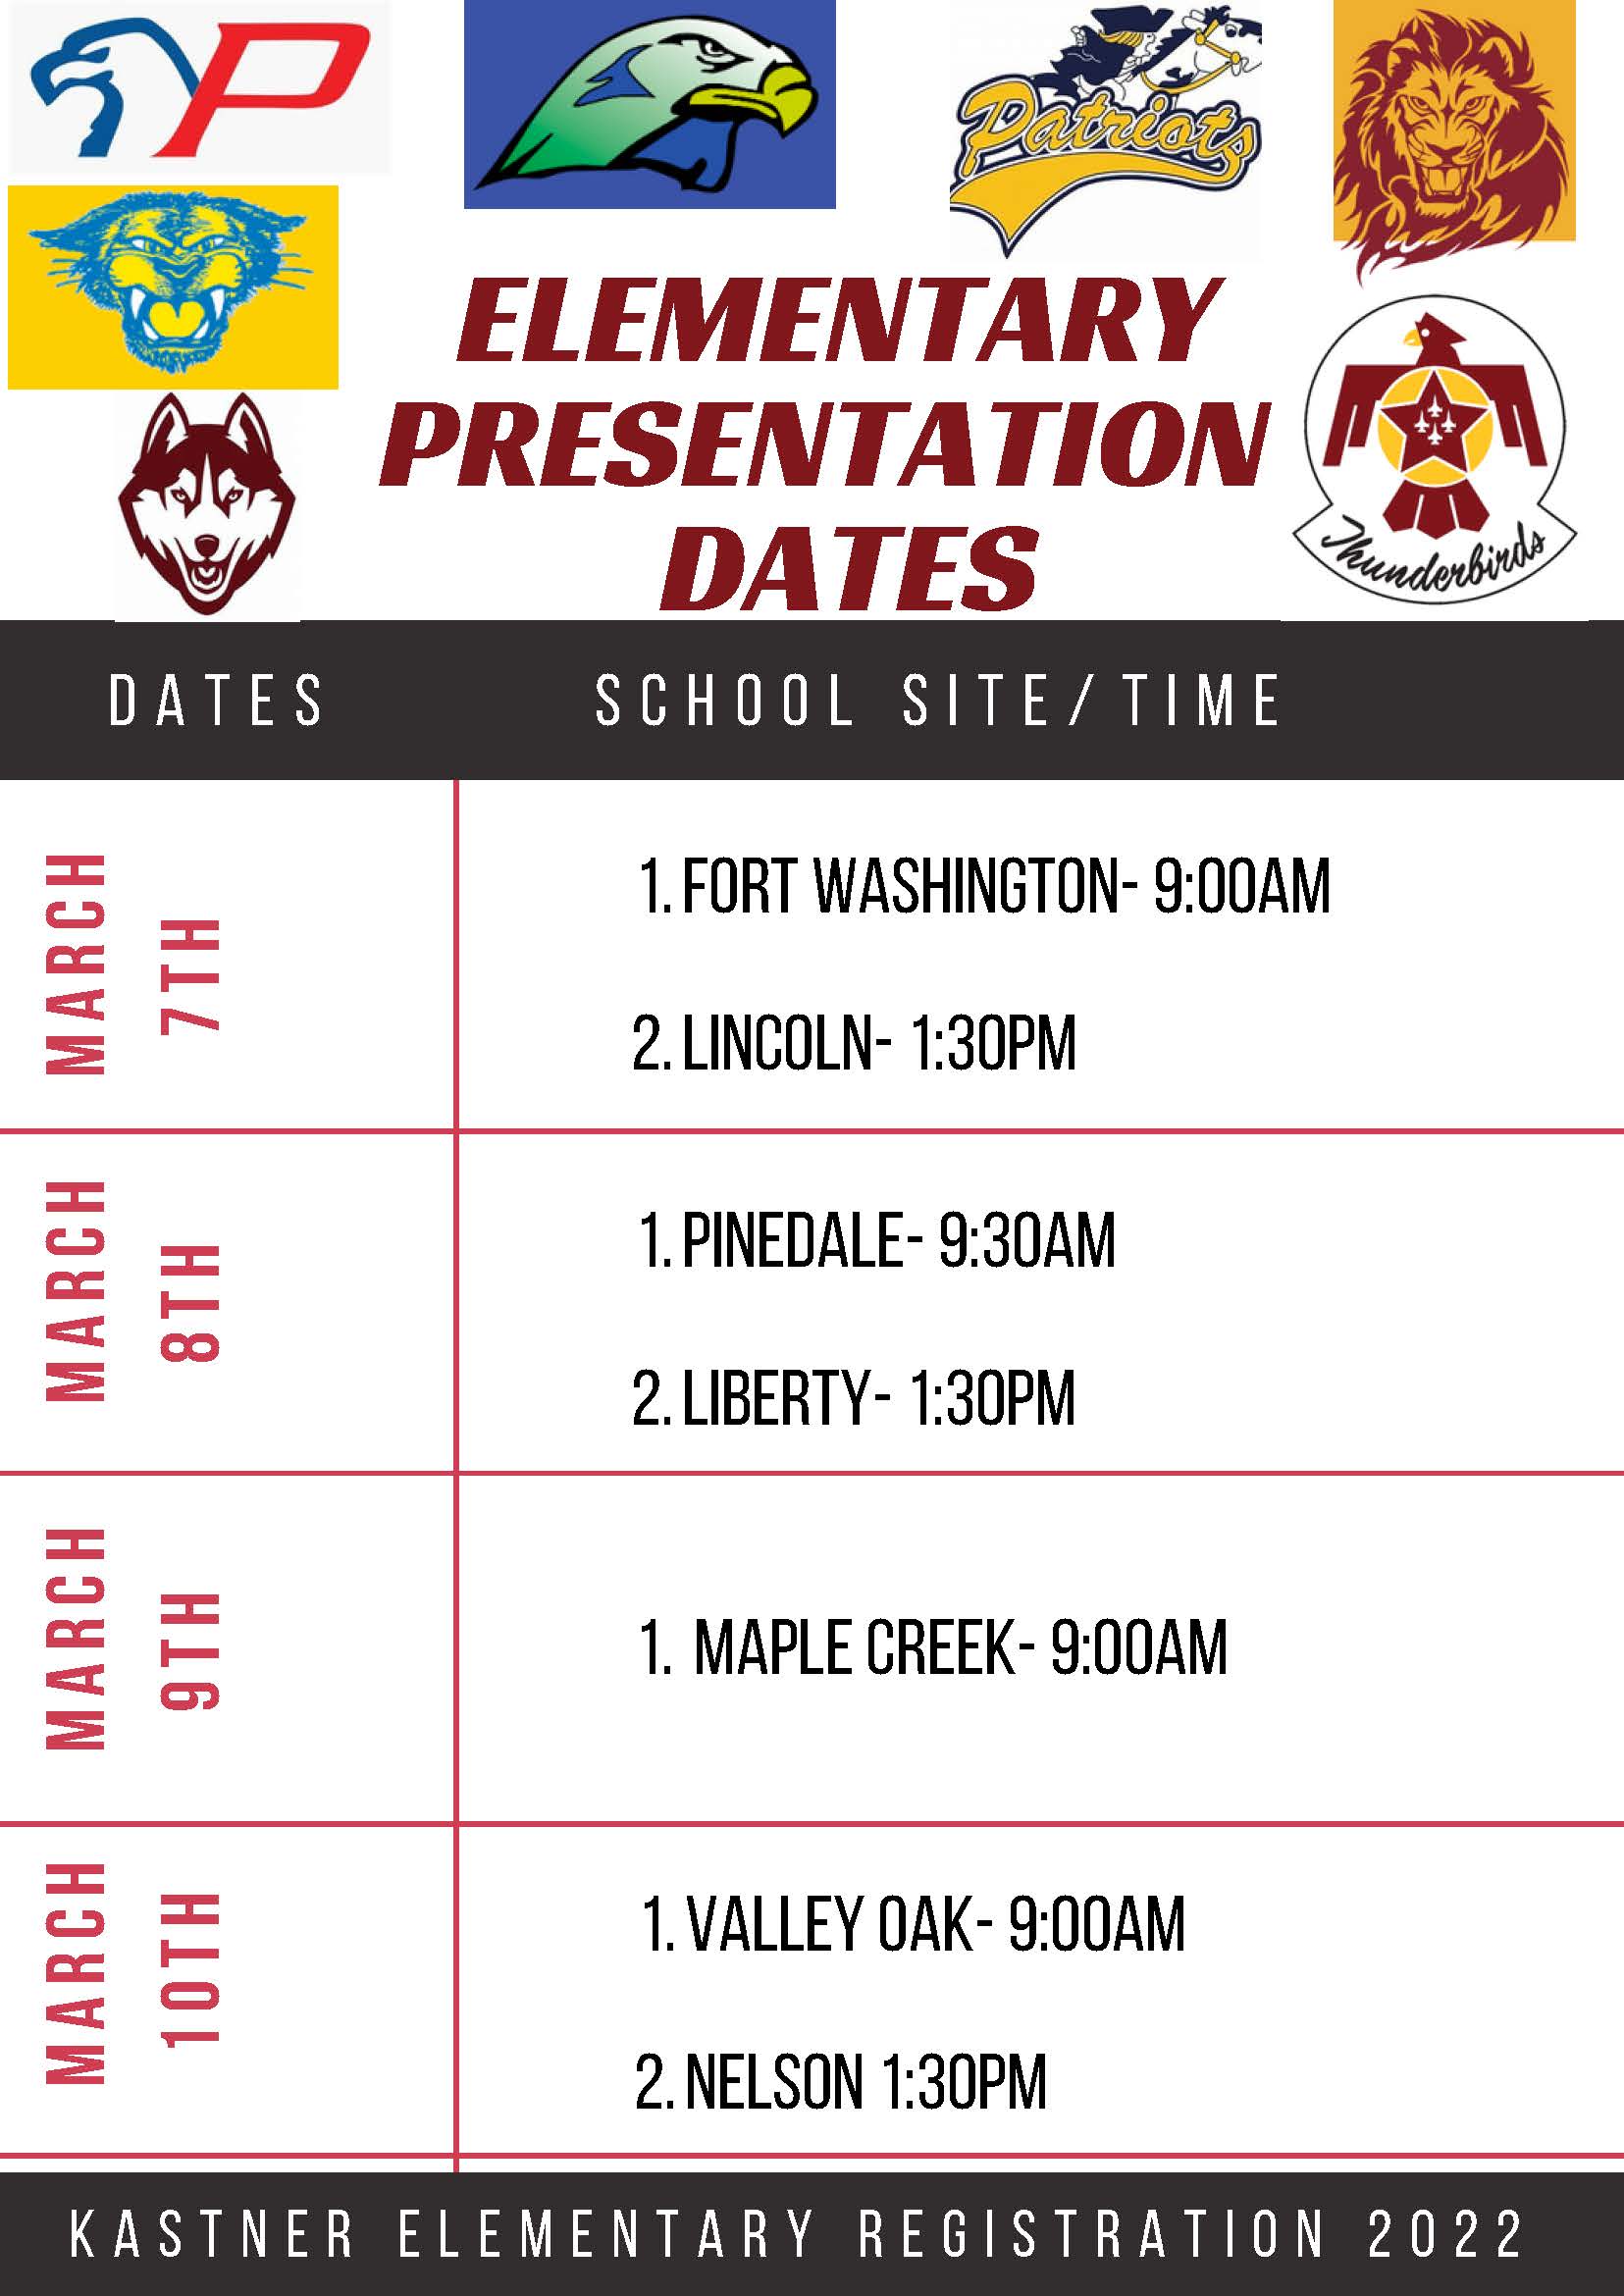 Elementary Presentation dates